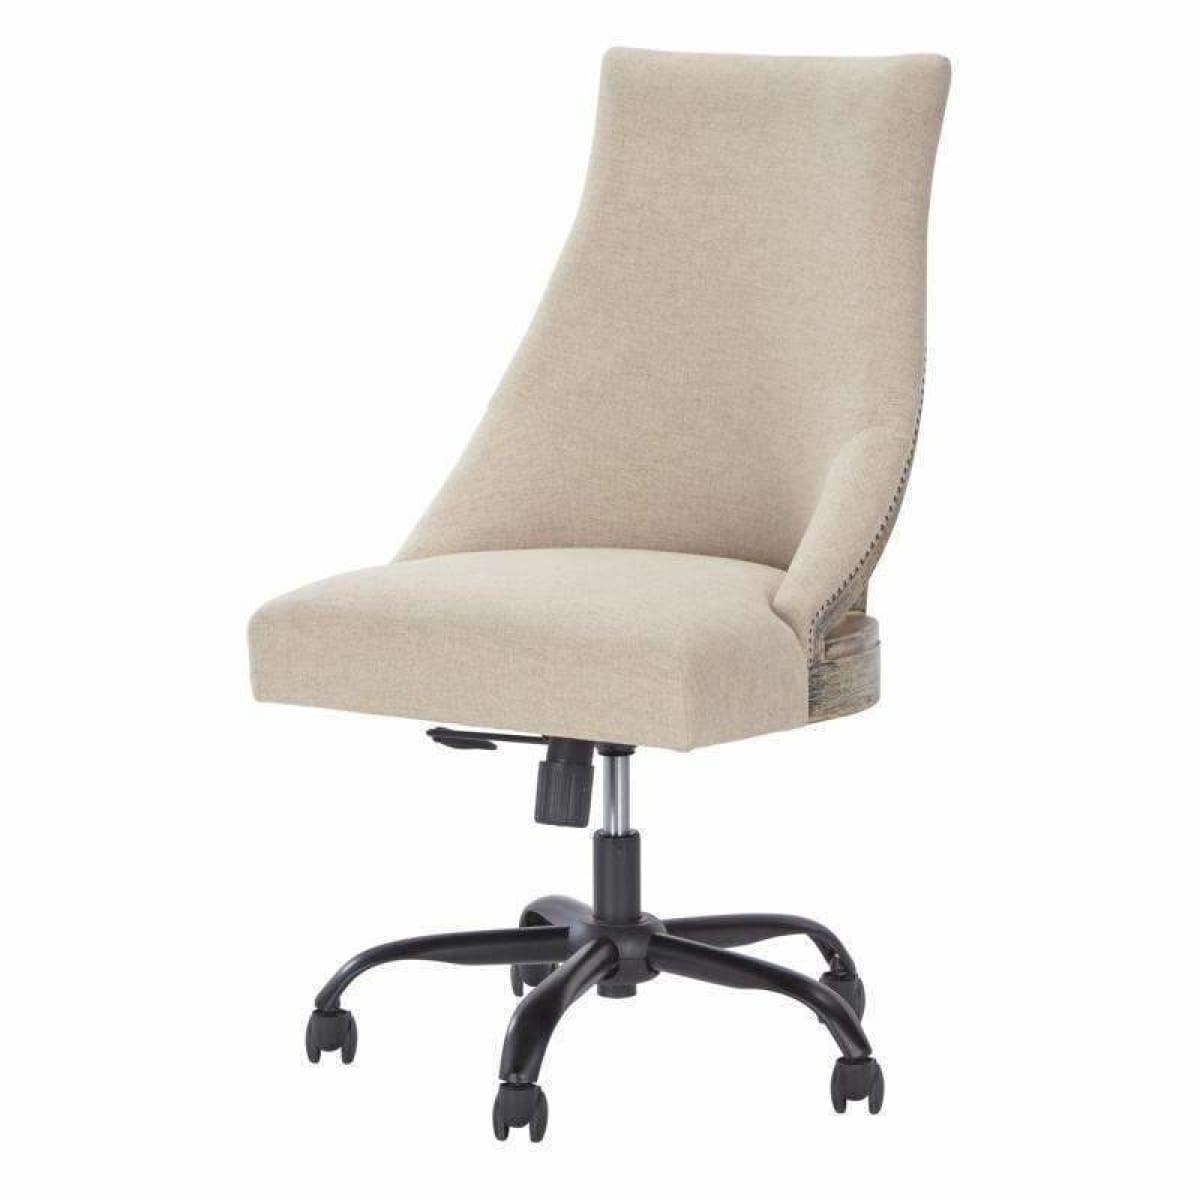 Office Chair Program - Office Chair